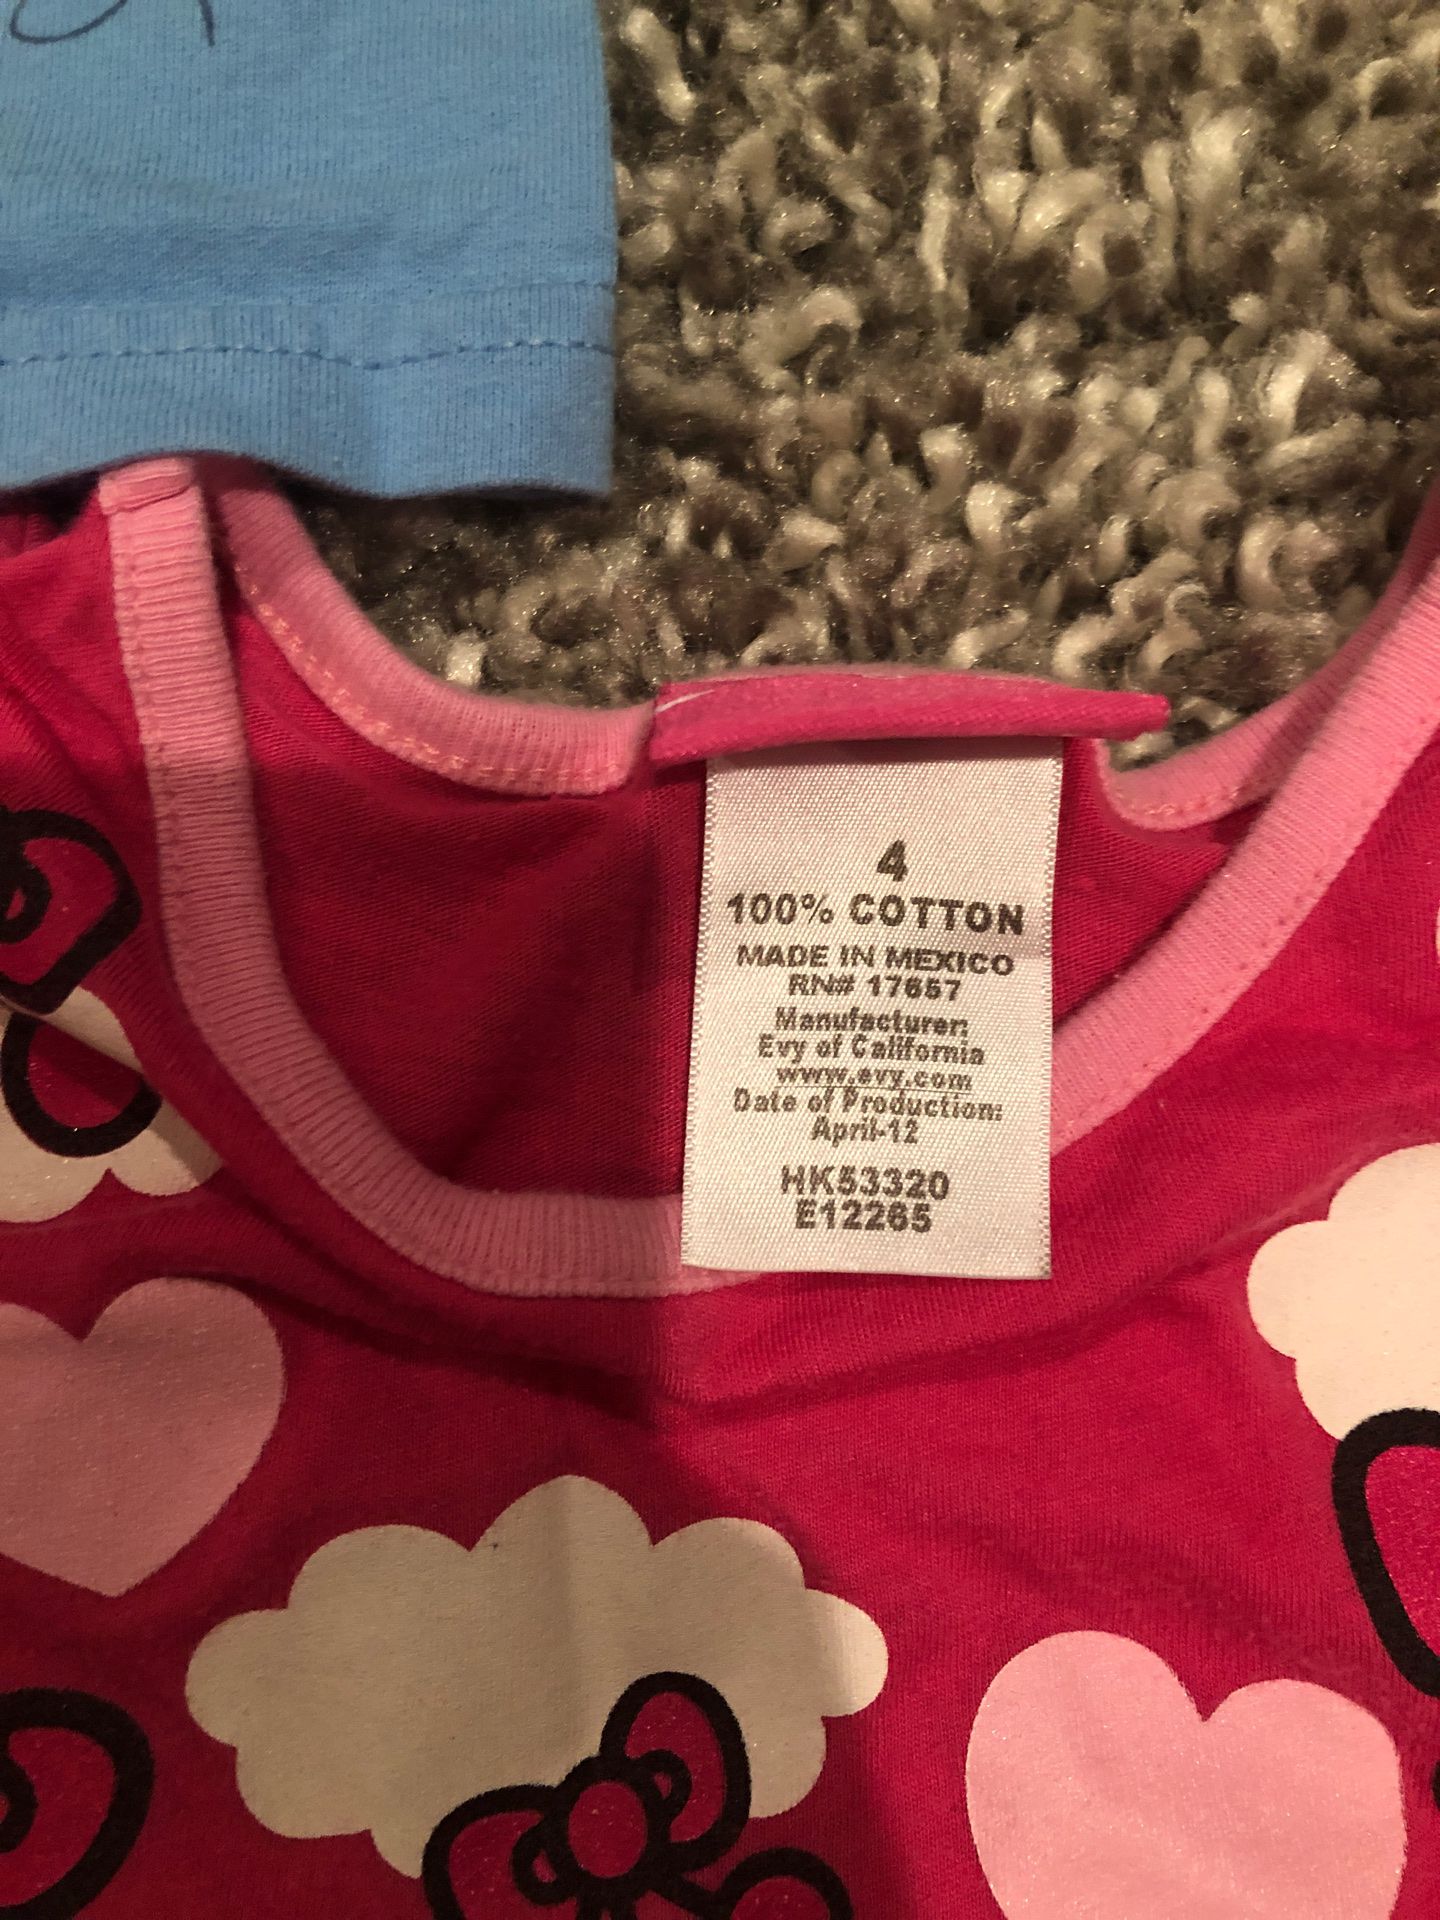 Disney store size 5/6 Cinderella glitter shirts and hello kitty size 4